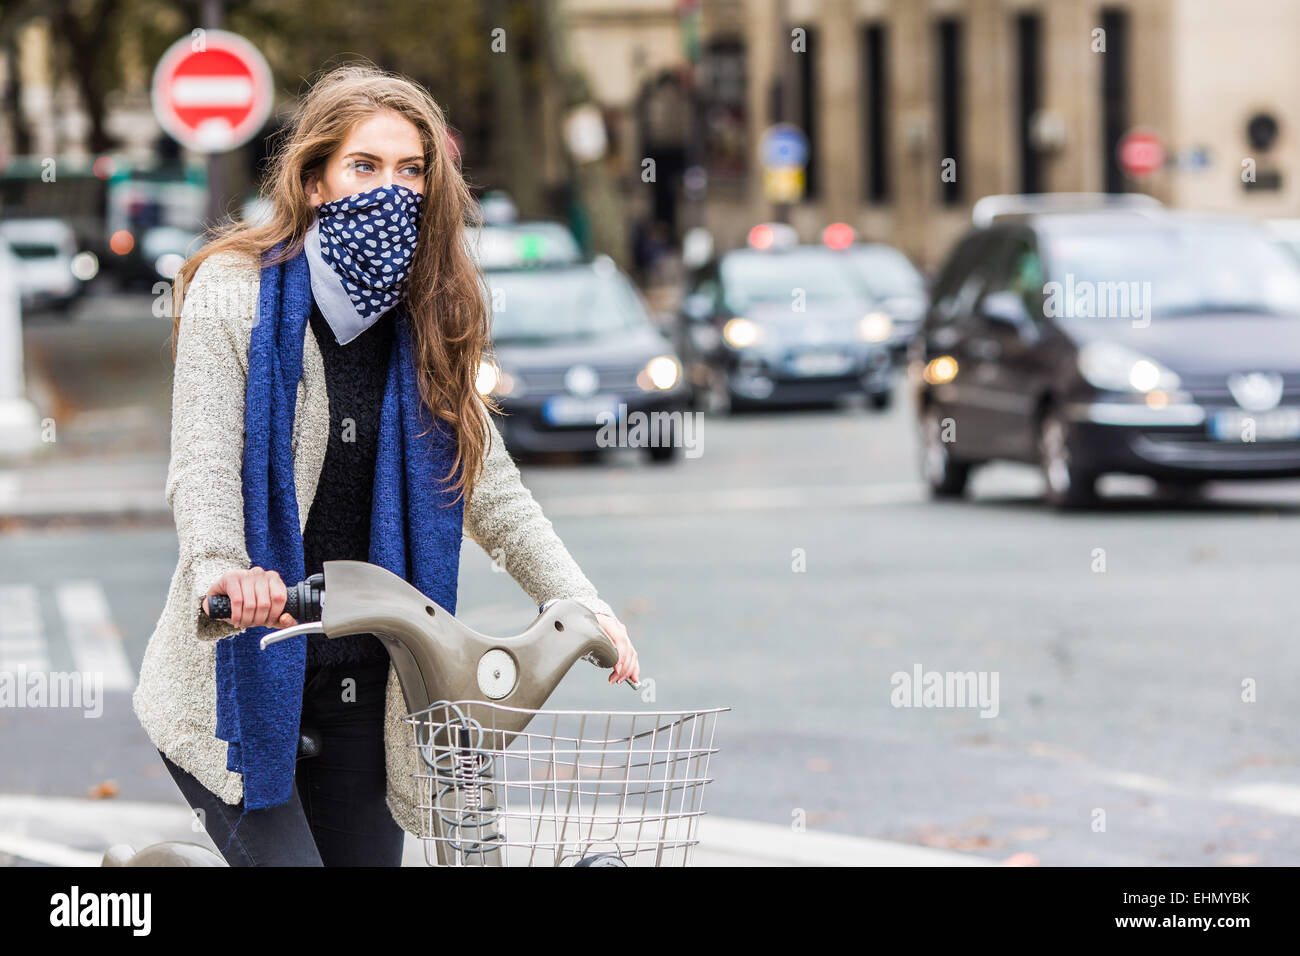 Woman riding a bicyle in a urban environment. Stock Photo